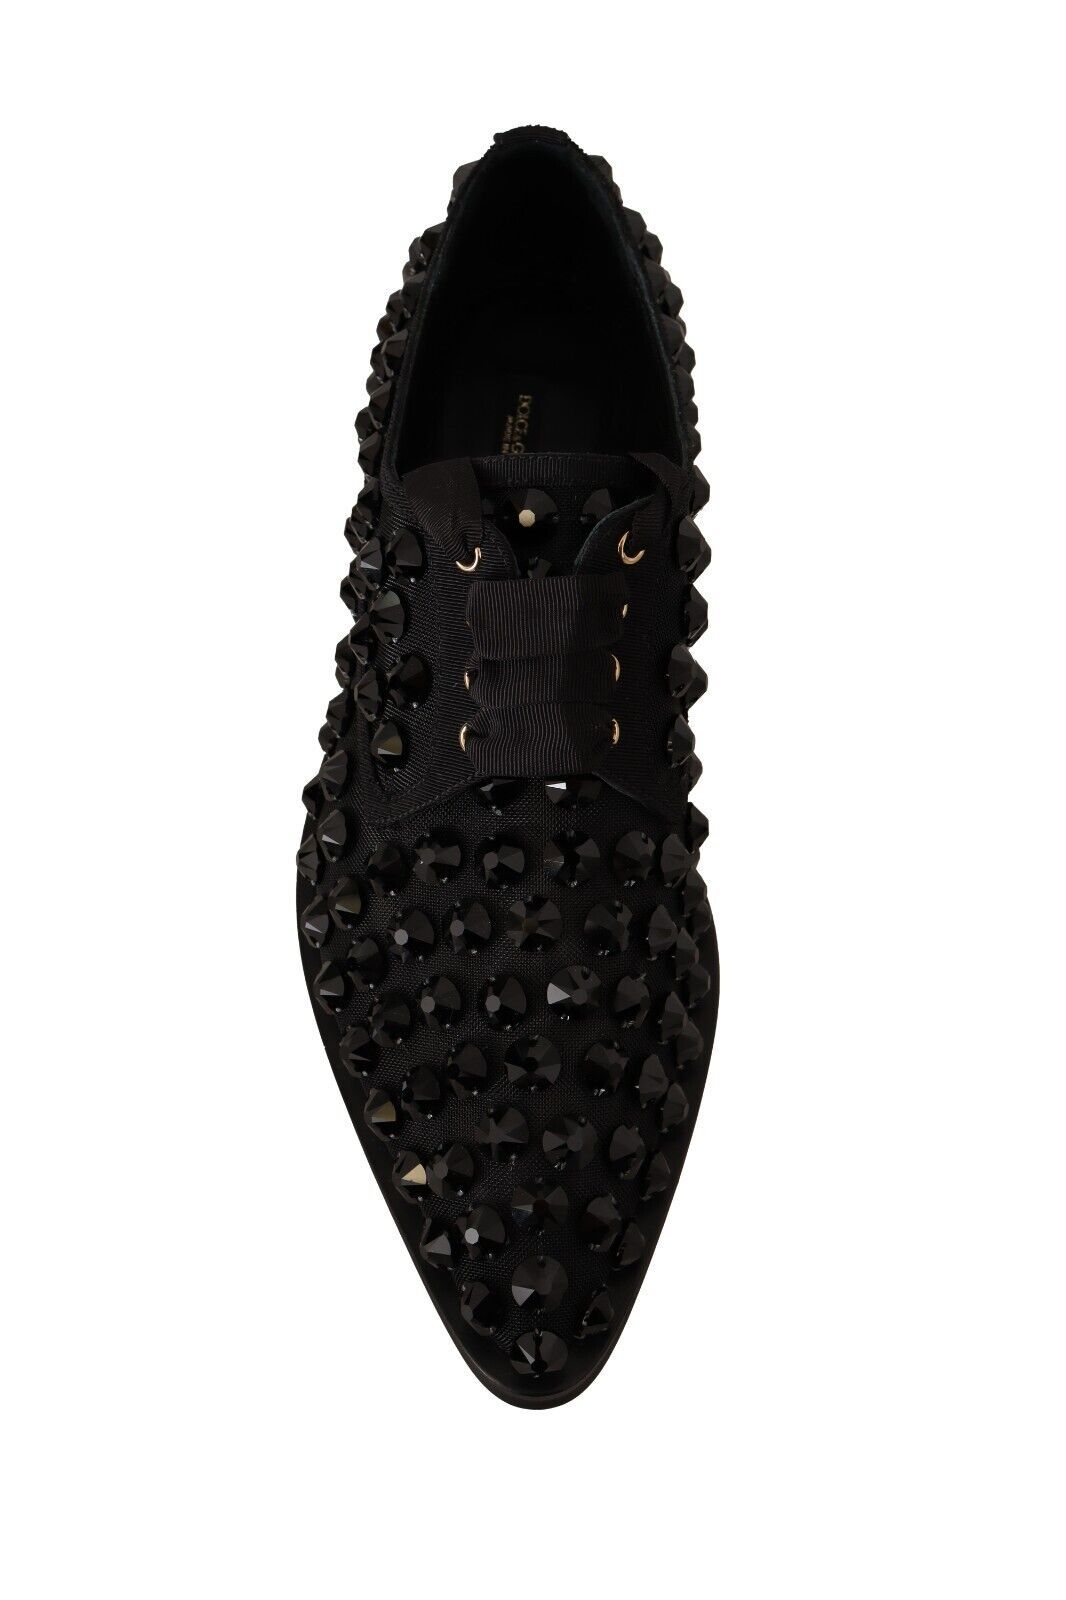 Dolce & Gabbana Black Lace Up Studded Formal Flats Shoes